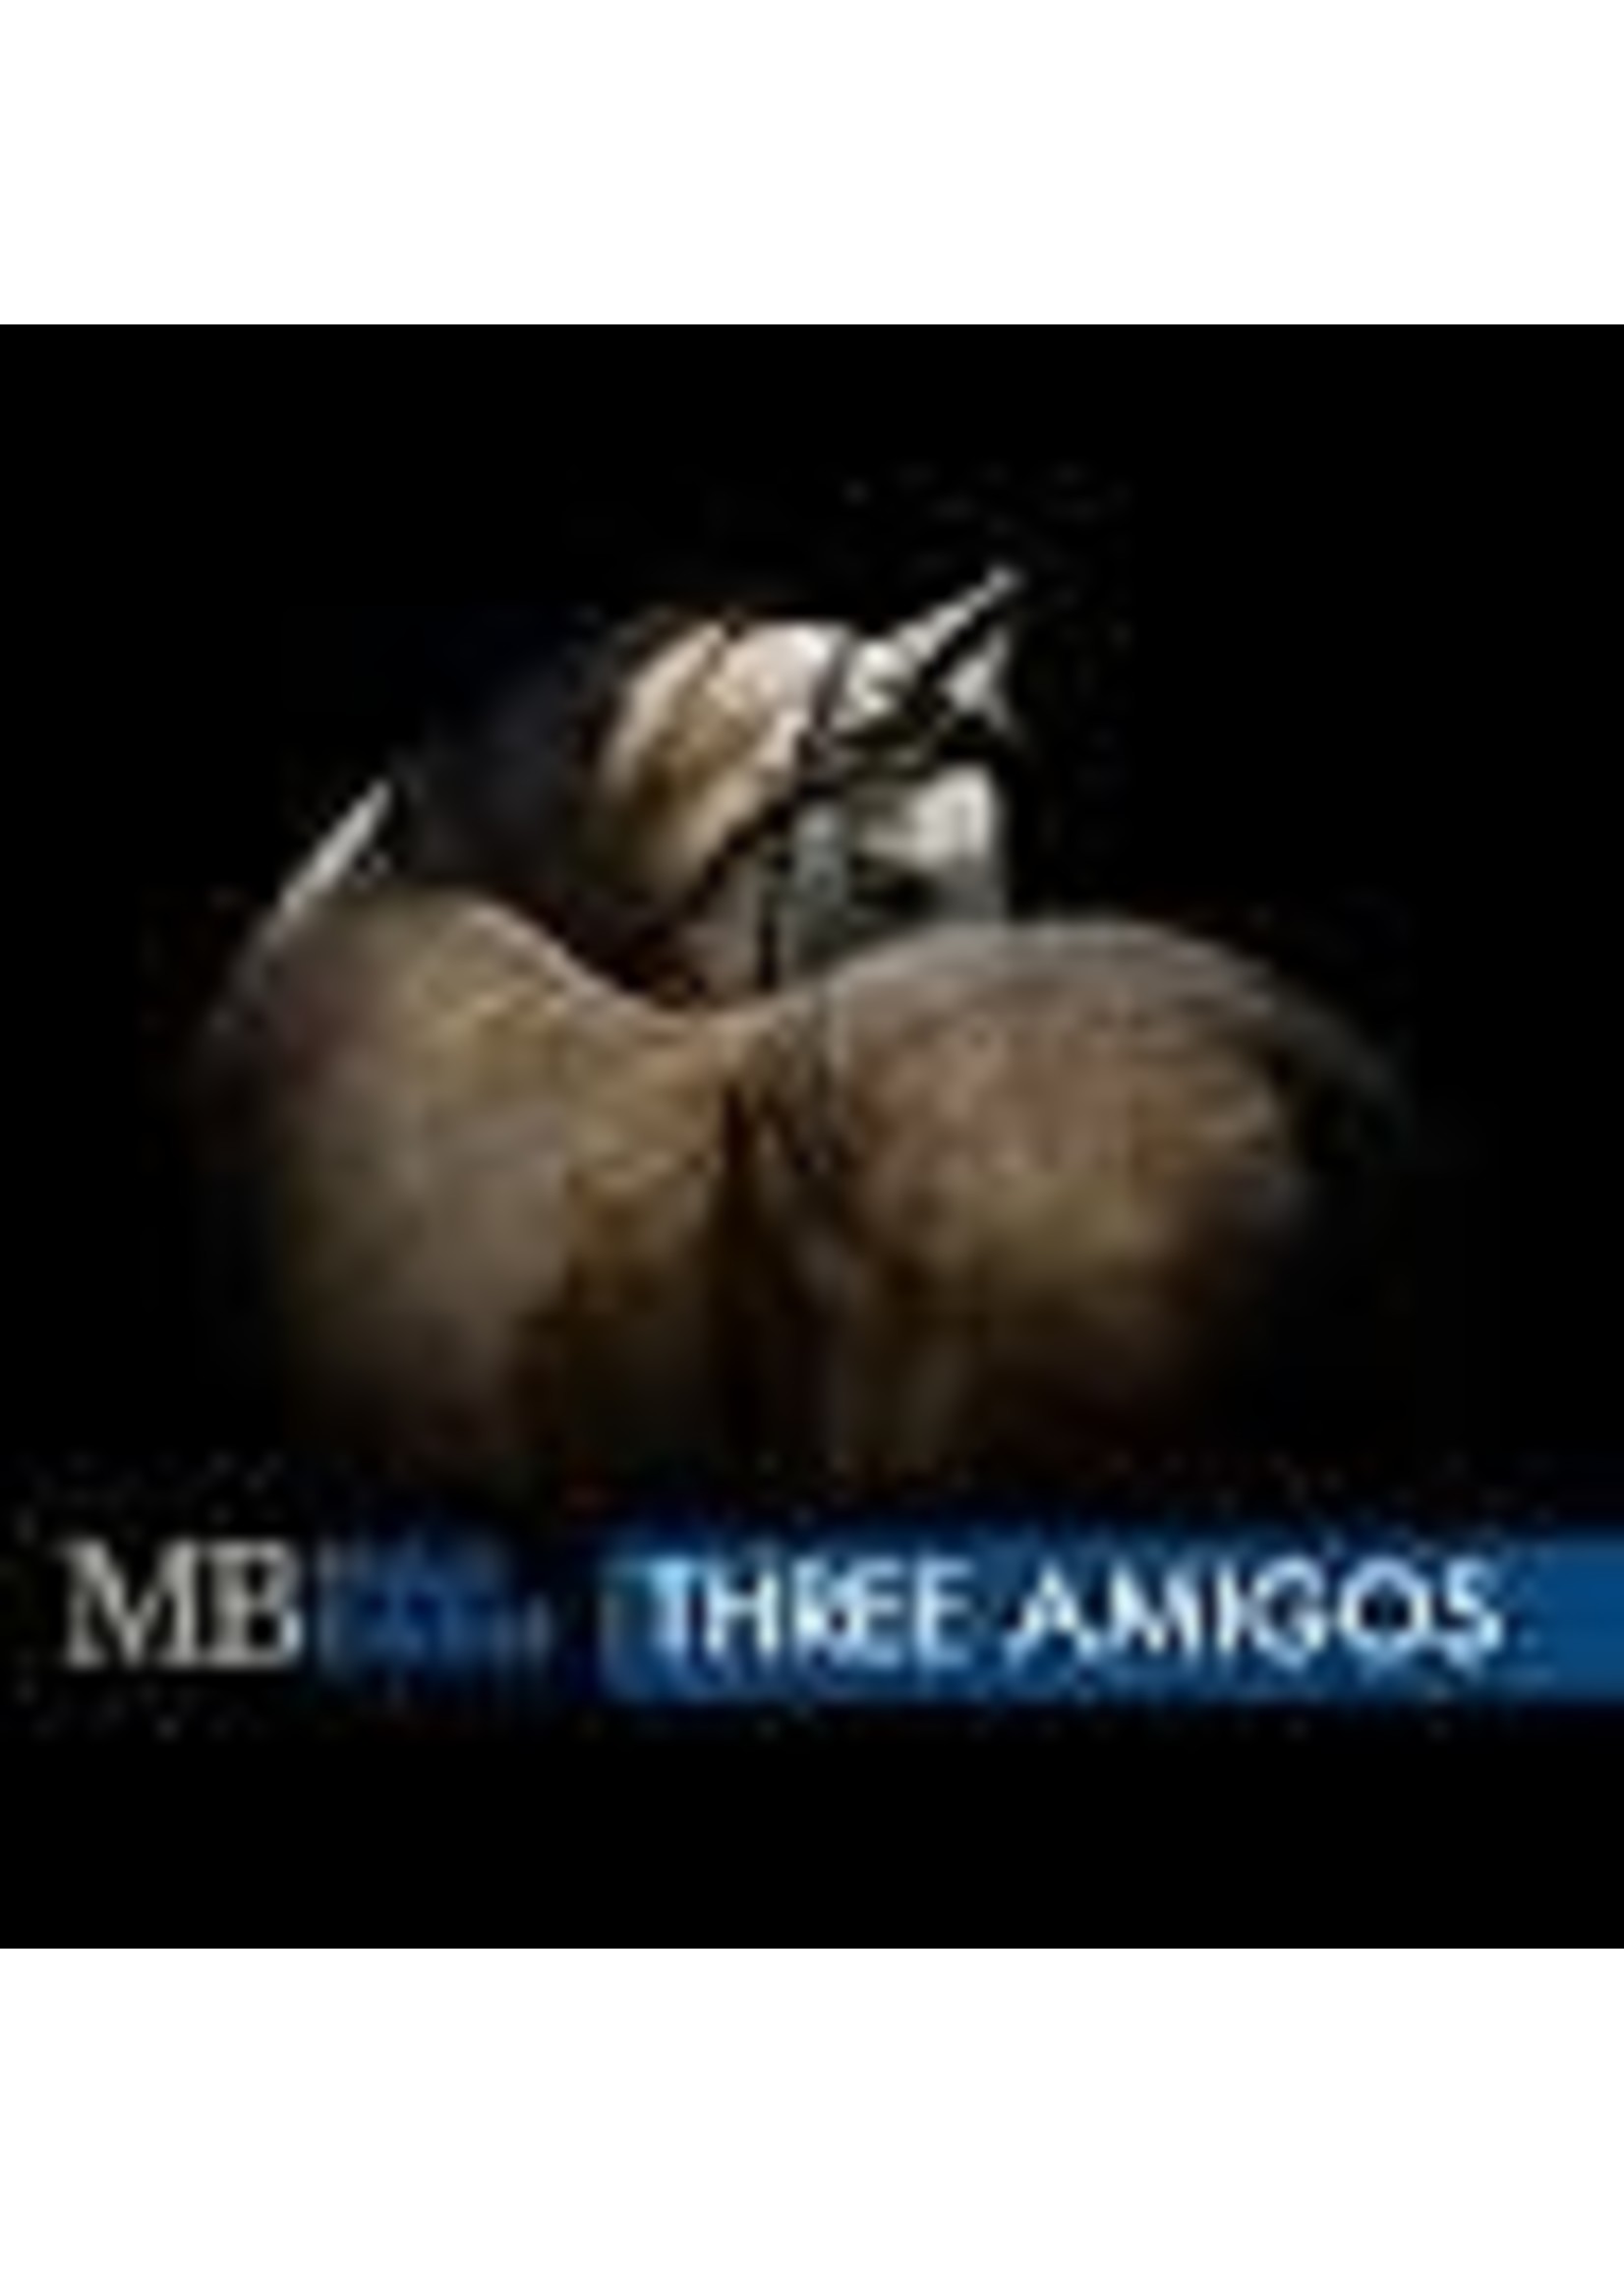 Mad Barn Three Amigos (Lys,Met,Thr) 1 kg mb